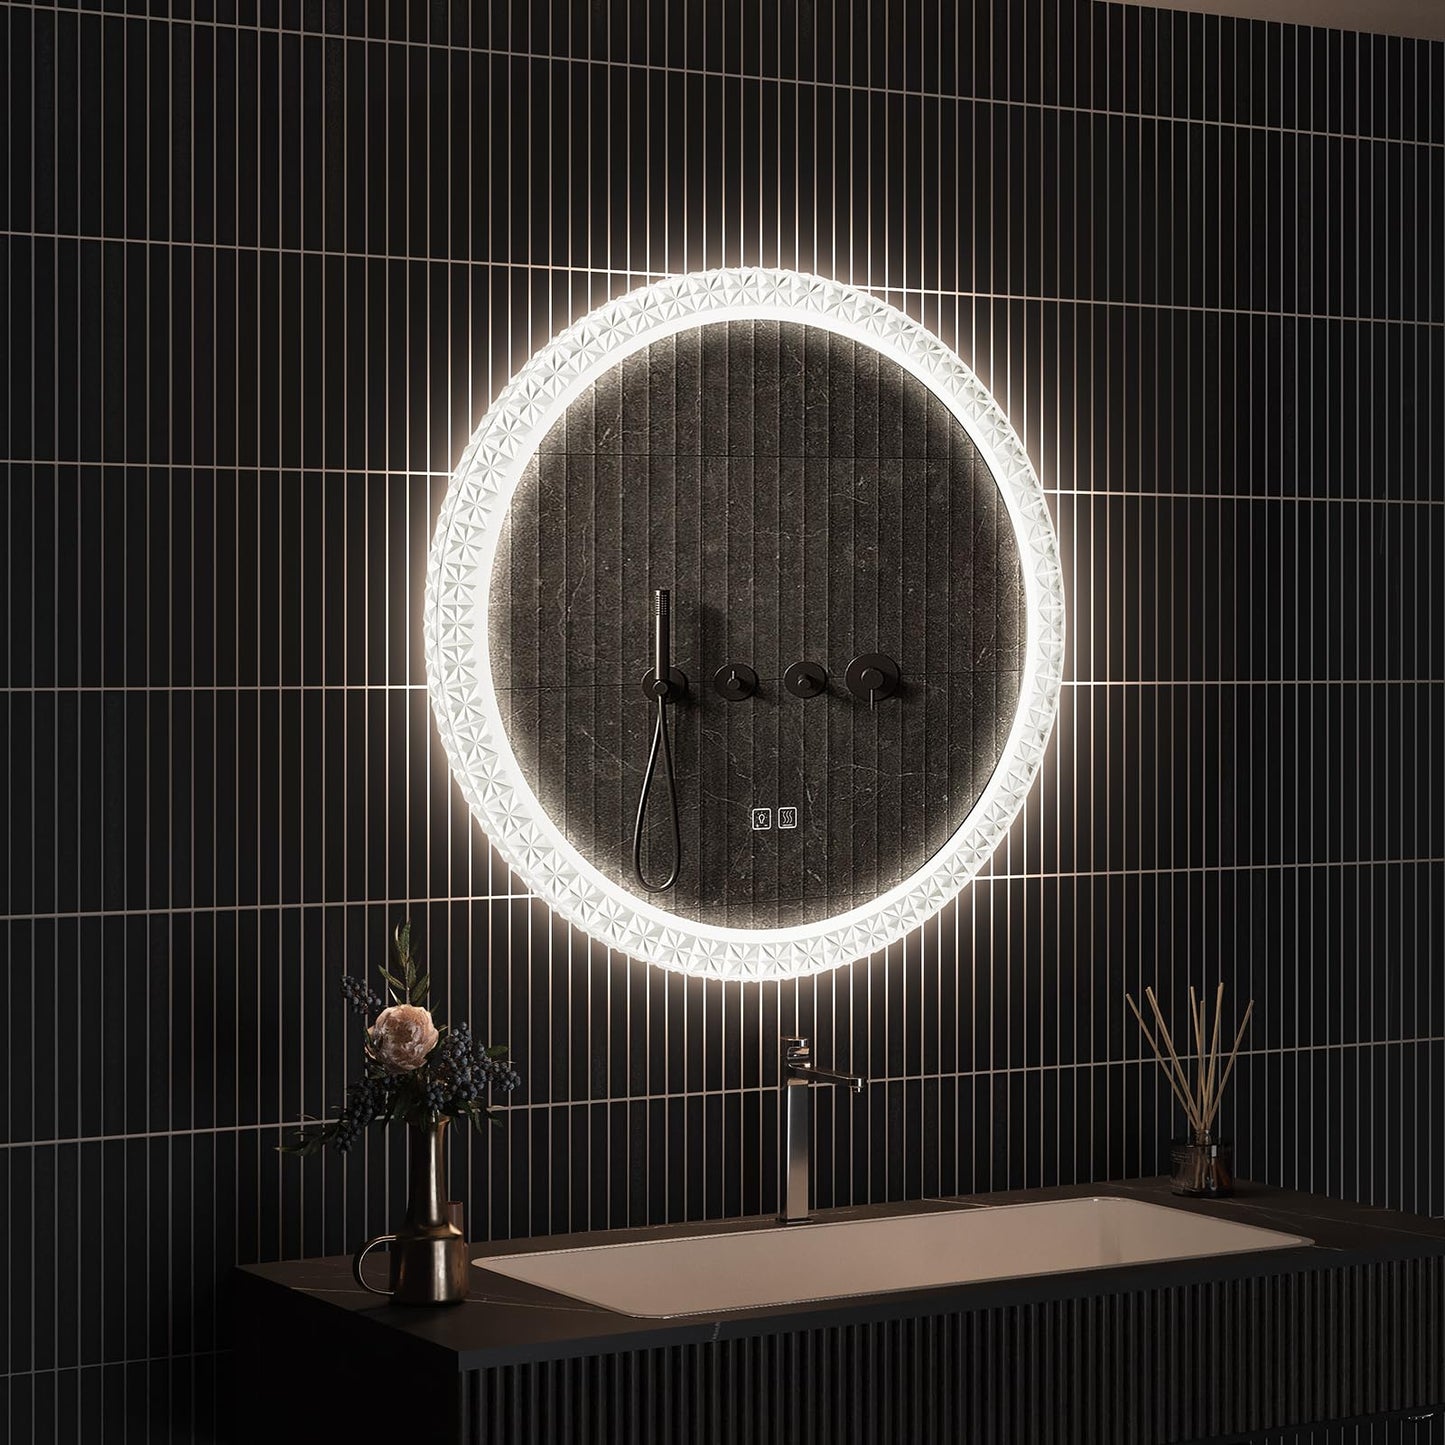 Round Acrylic LED Bathroom Mirror